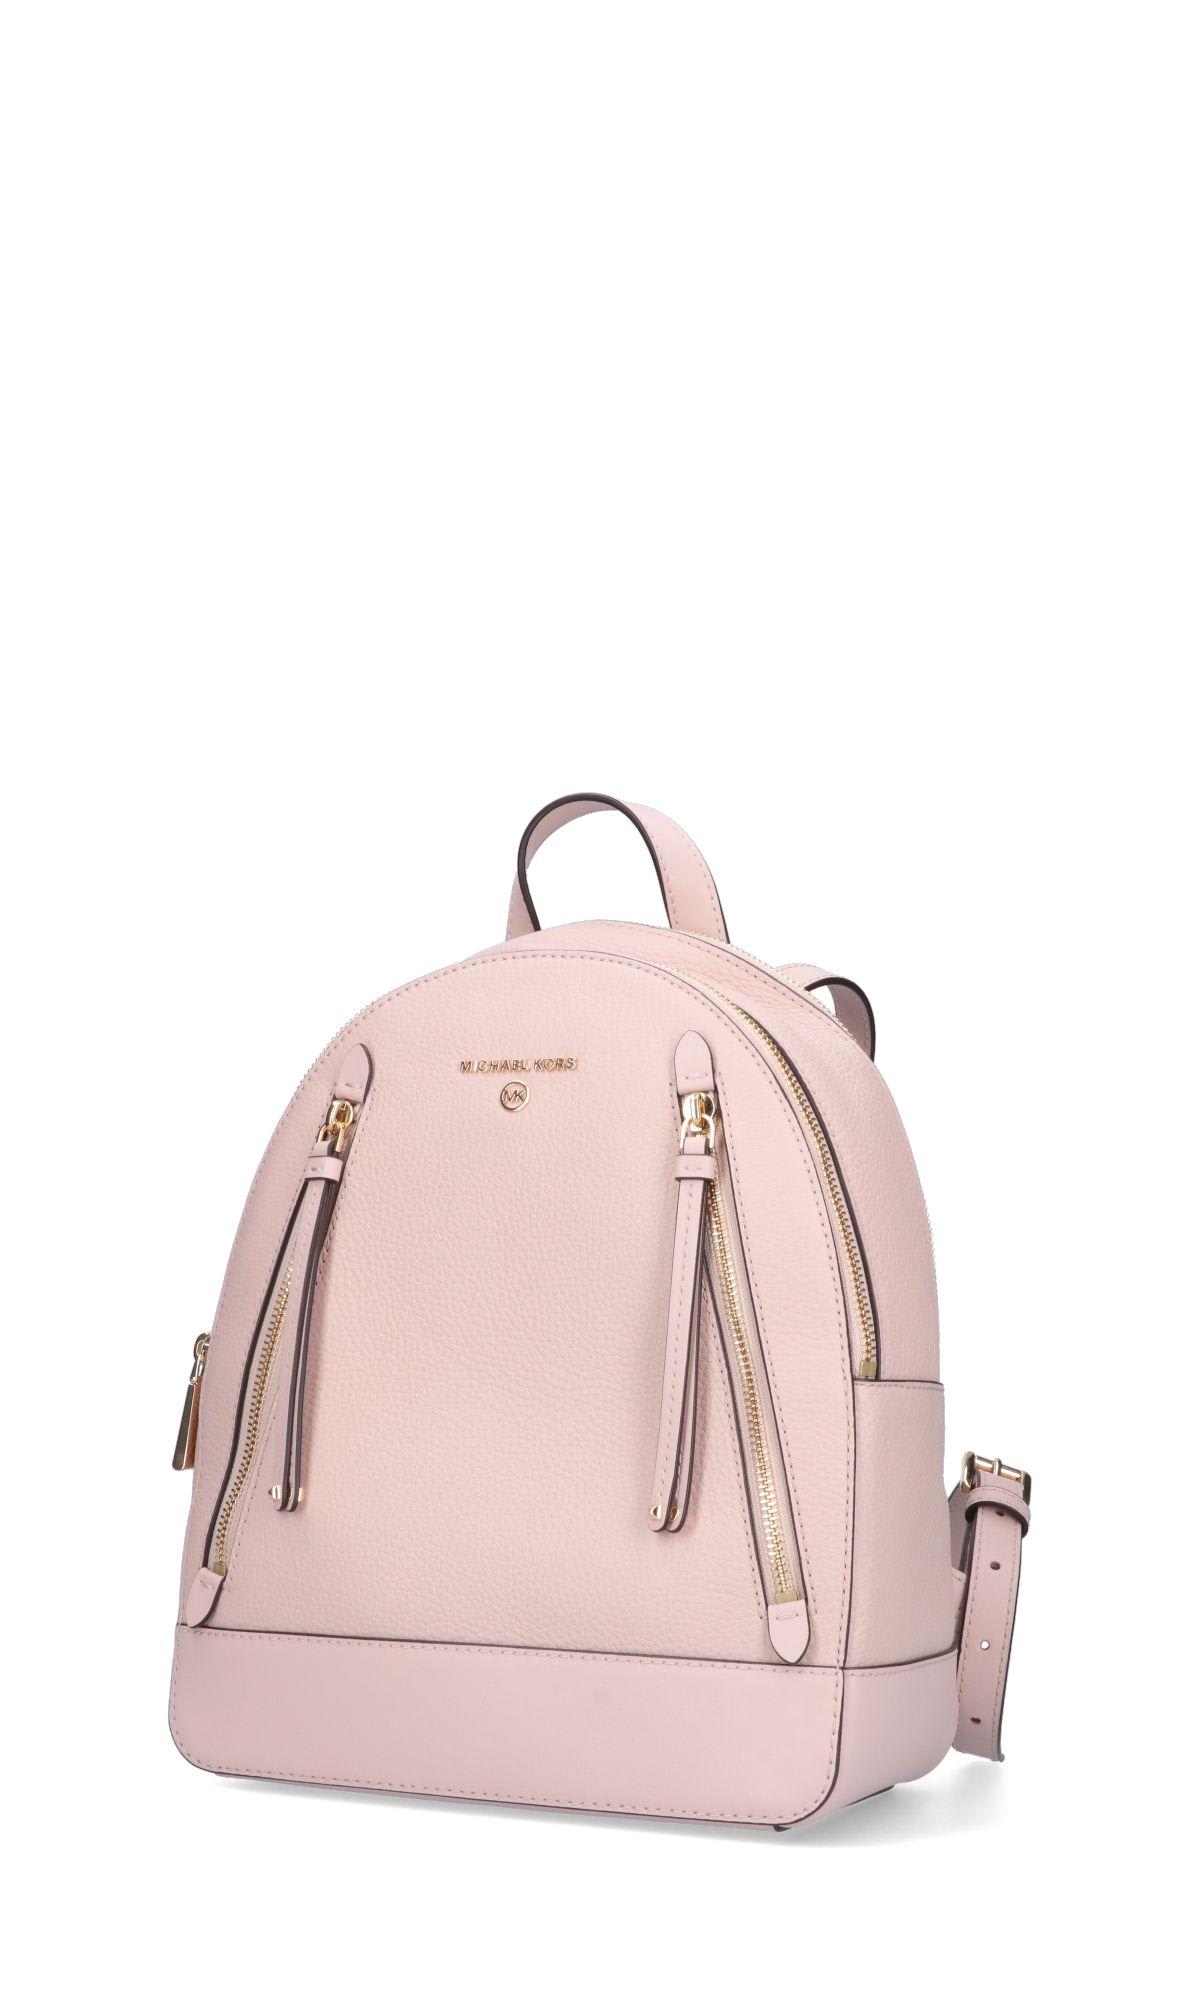 Michael Kors Brooklyn Medium Pebbled Leather Backpack Soft Pink